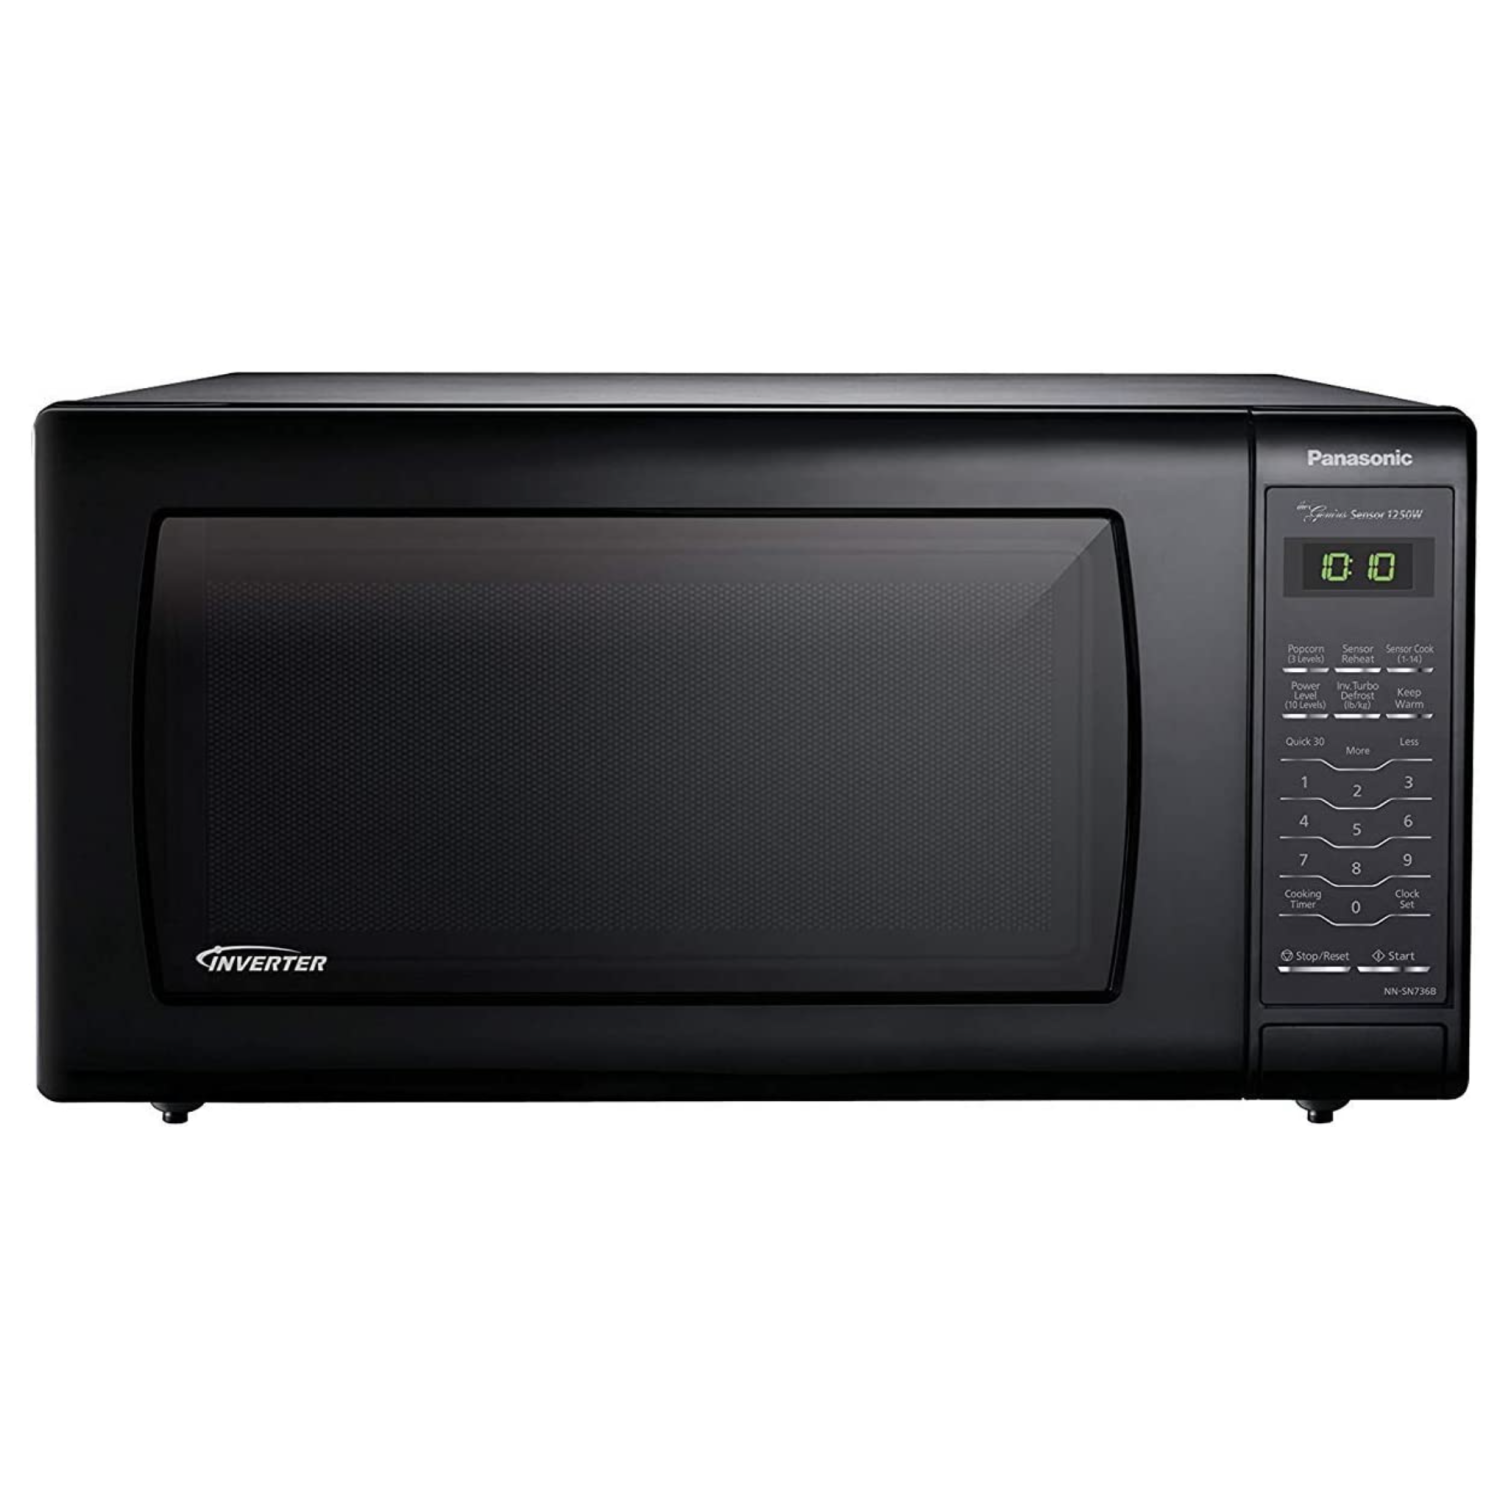 Panasonic 1.6 Cu. ft. Countertop Microwave Oven with Inverter Technology (NN-SN736B) - Black